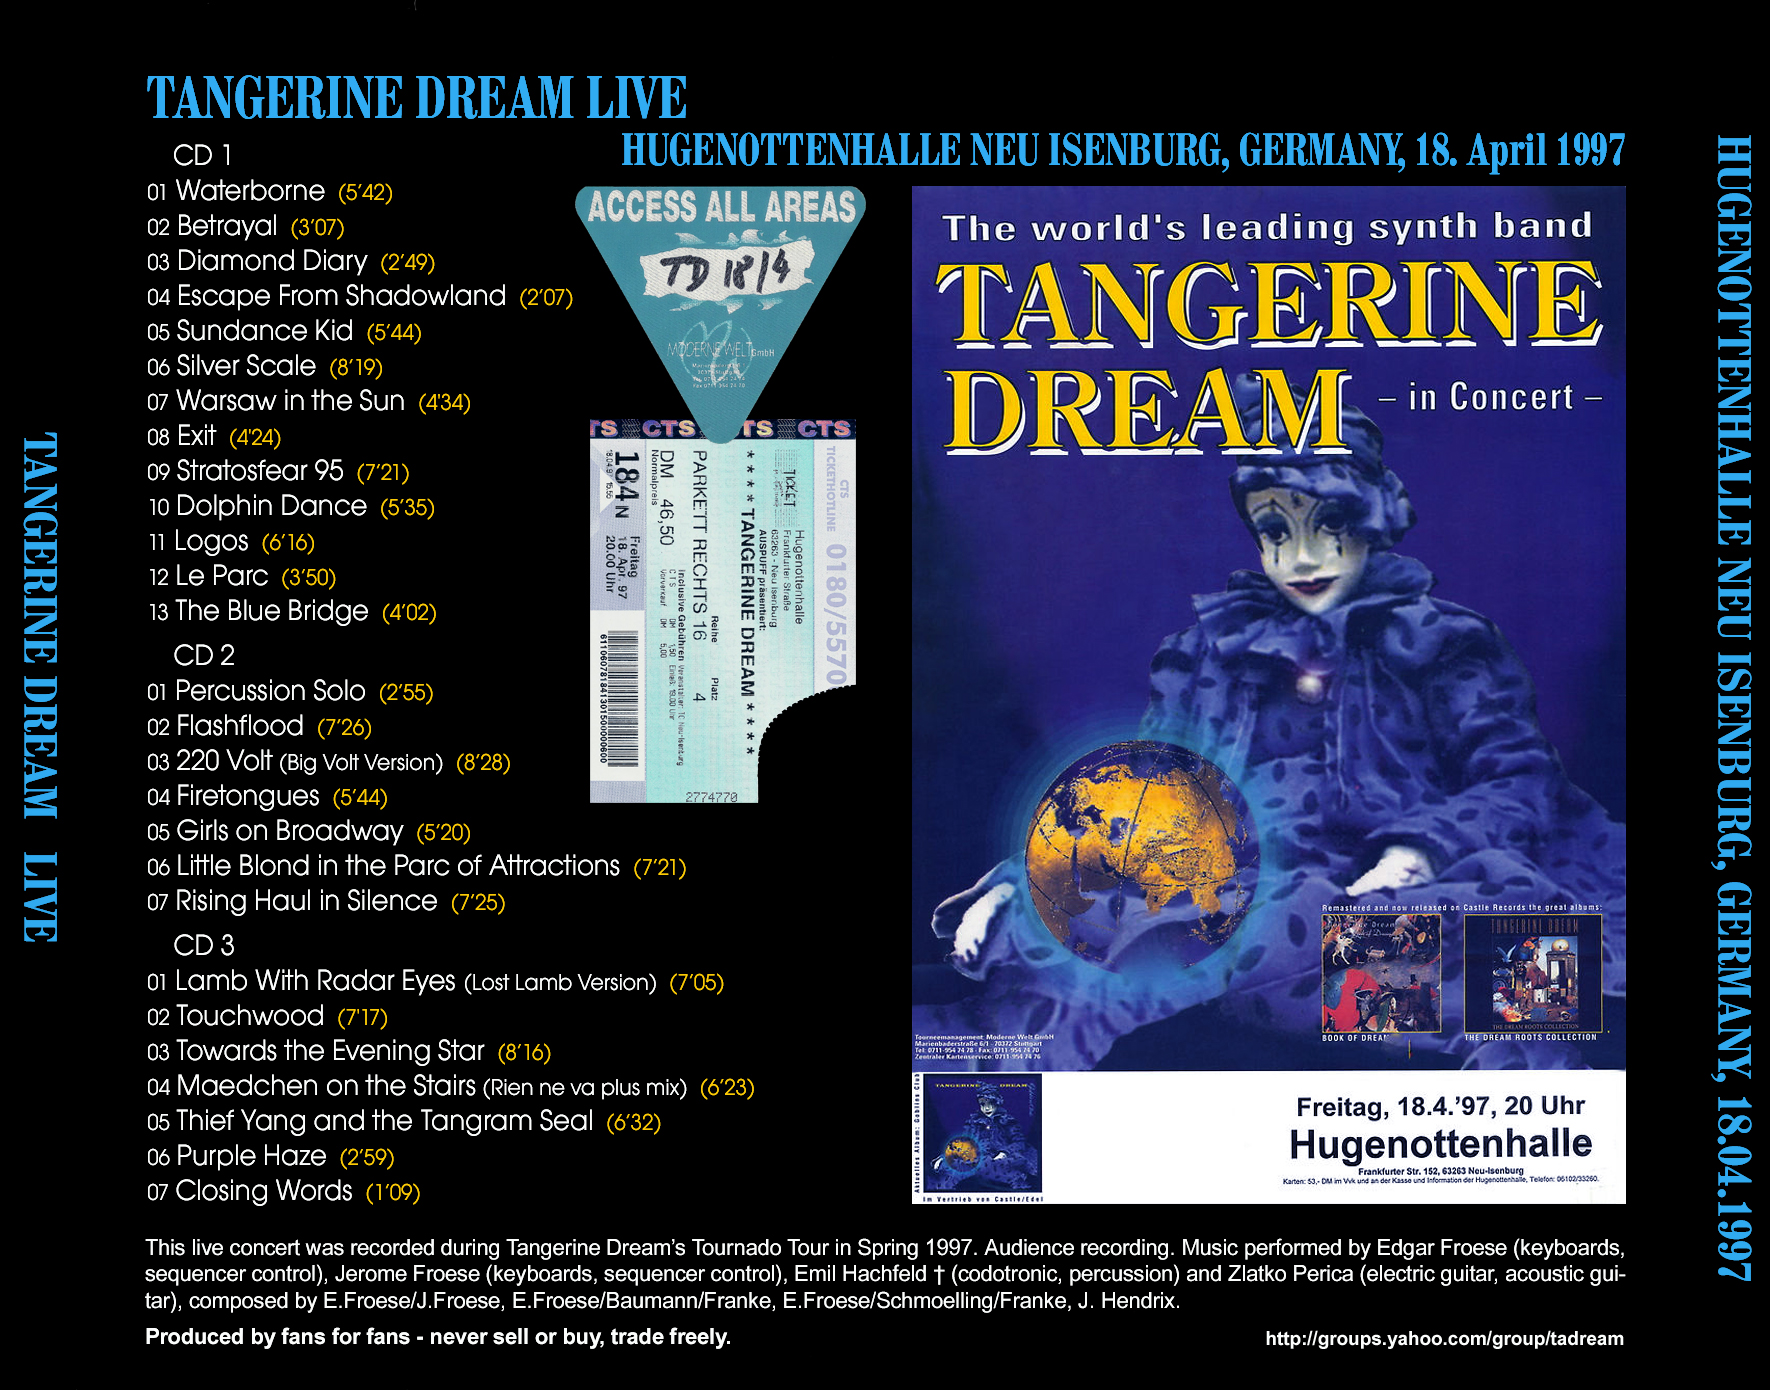 TangerineDream1997-04-18HugenottenhalleNeuIsenburgGermany (1).jpg